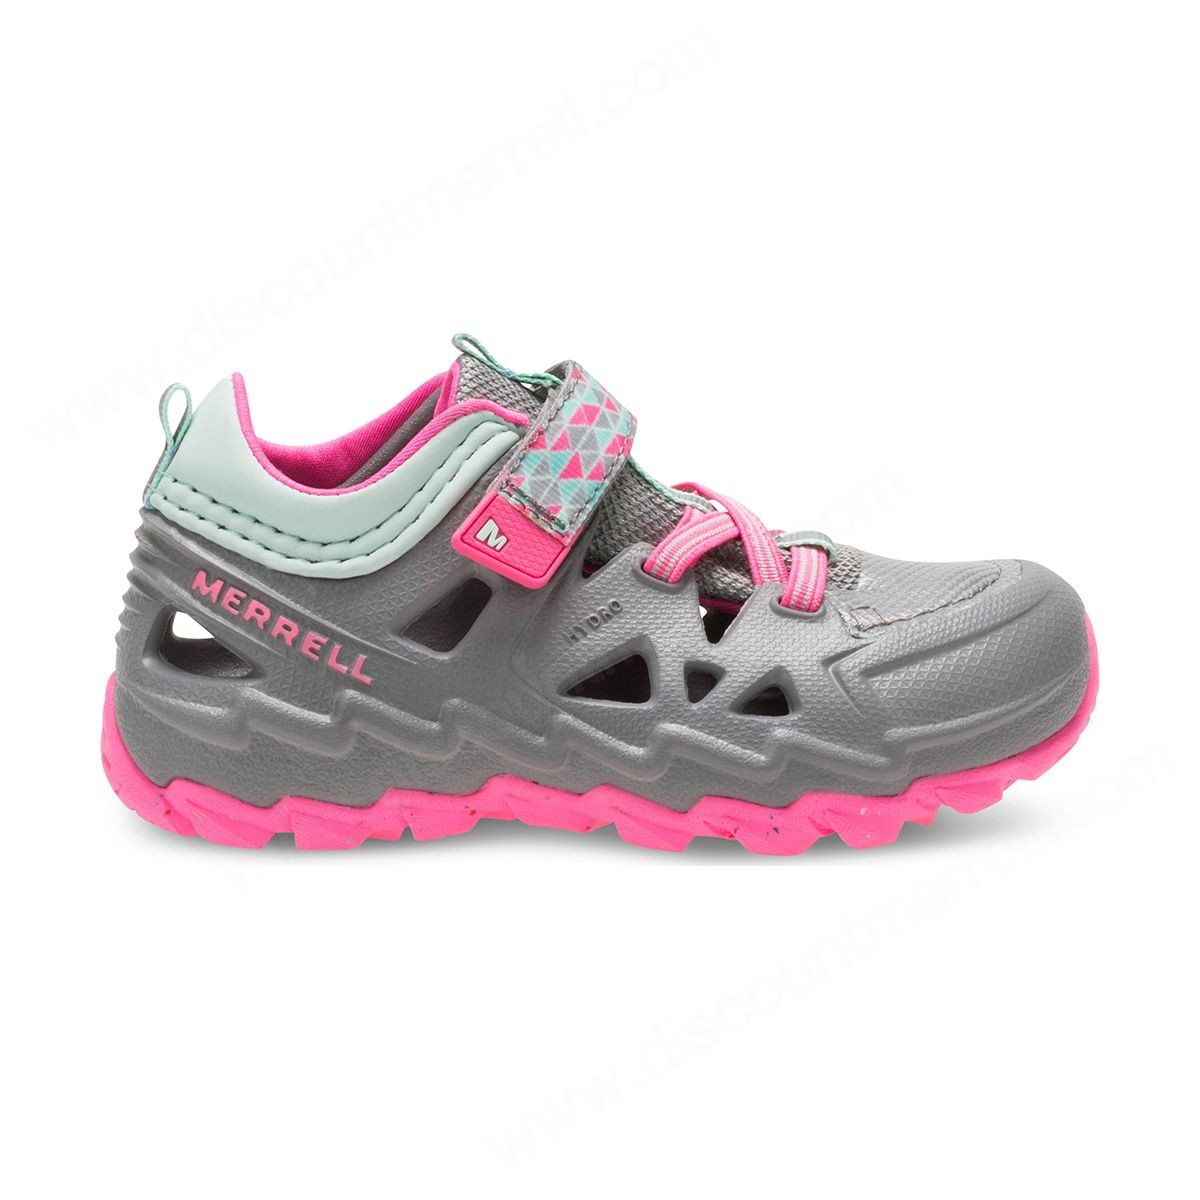 Merrell Little Kid's Hydro Junior . Sneakers Sandal Grey/pink - -2